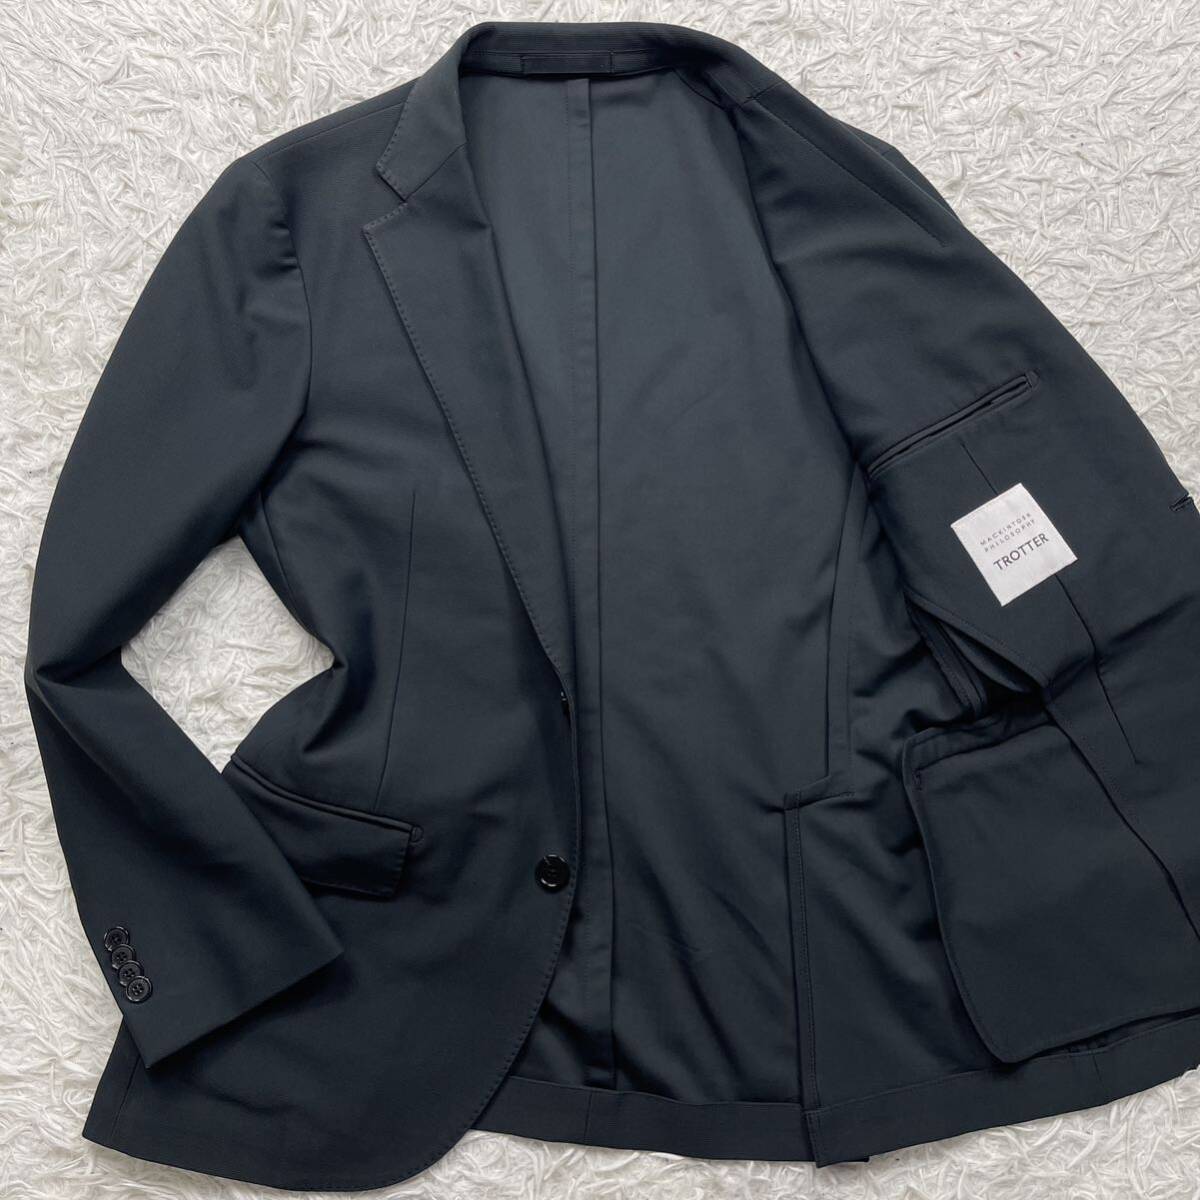  превосходный товар Macintosh firoso футов rota- Anne темно синий эластичность tailored jacket серый M ранг 38R MACKINTOSH PHILOSOPHY TROTTER